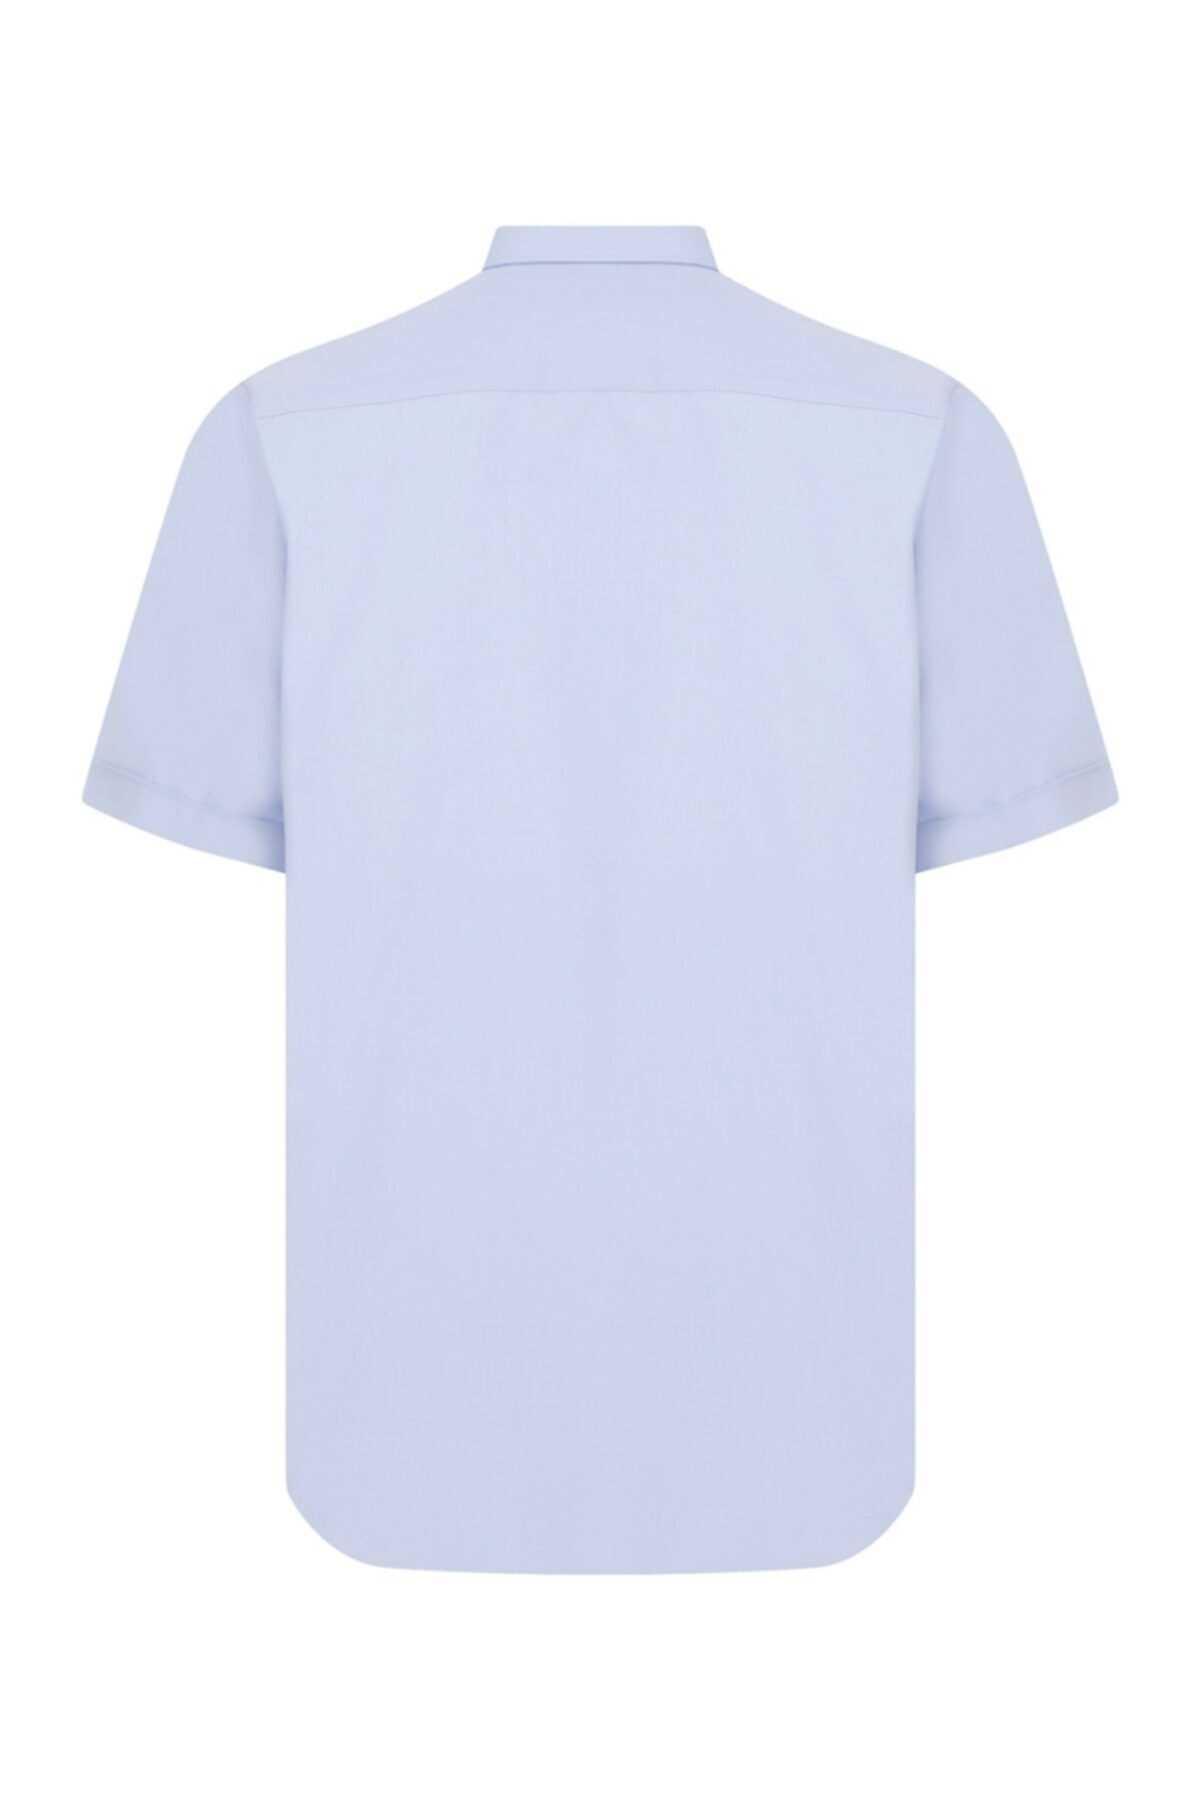 پیراهن کلاسیک مردانه جدید برند nacar çarşı رنگ آبی کد ty114884155